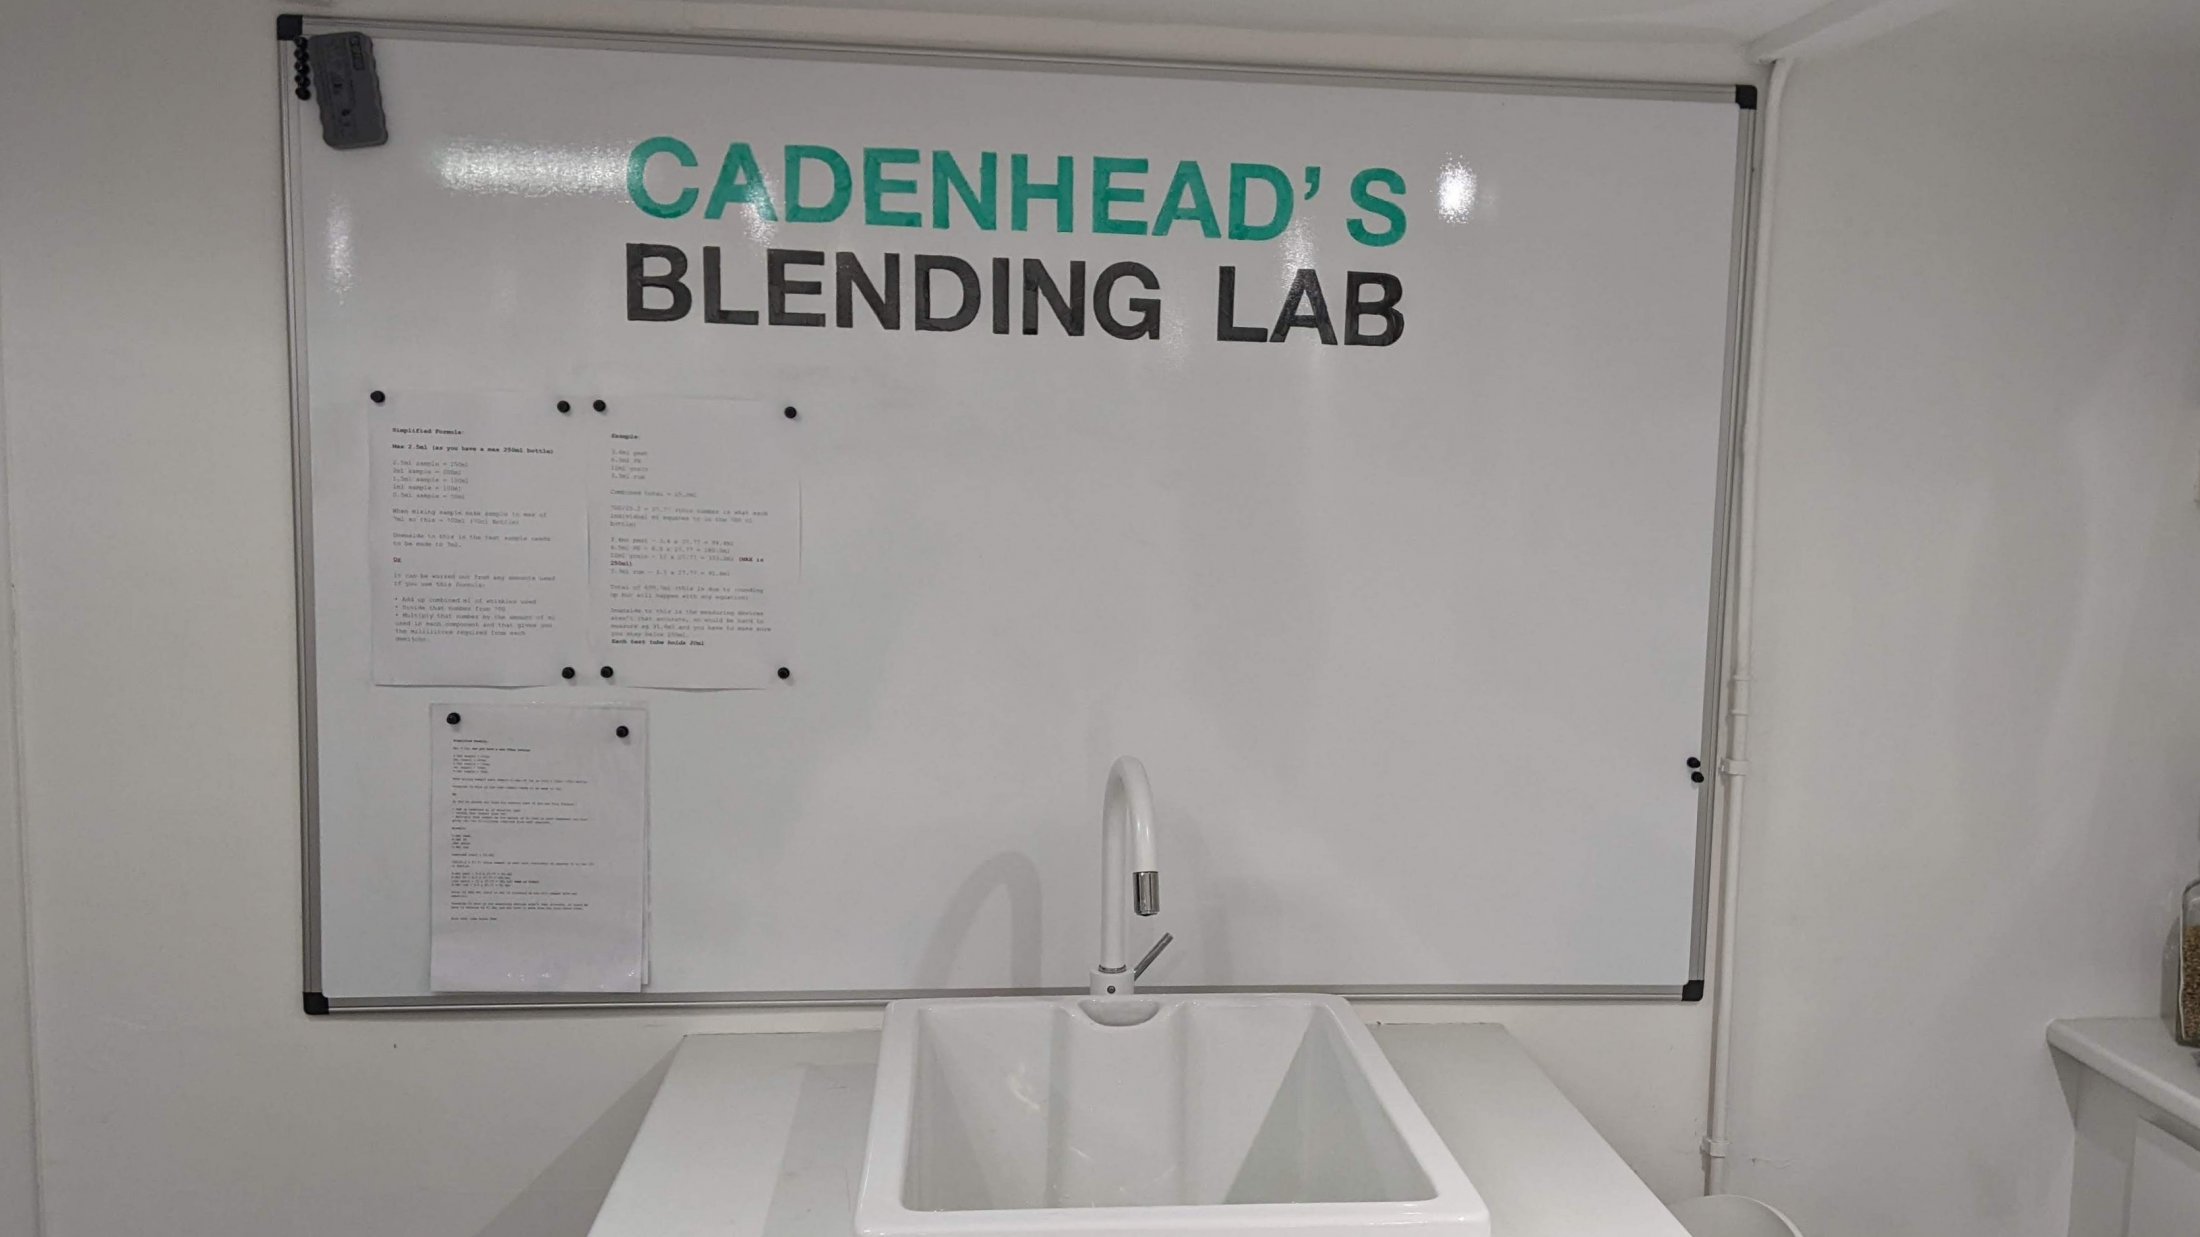 Blending lab